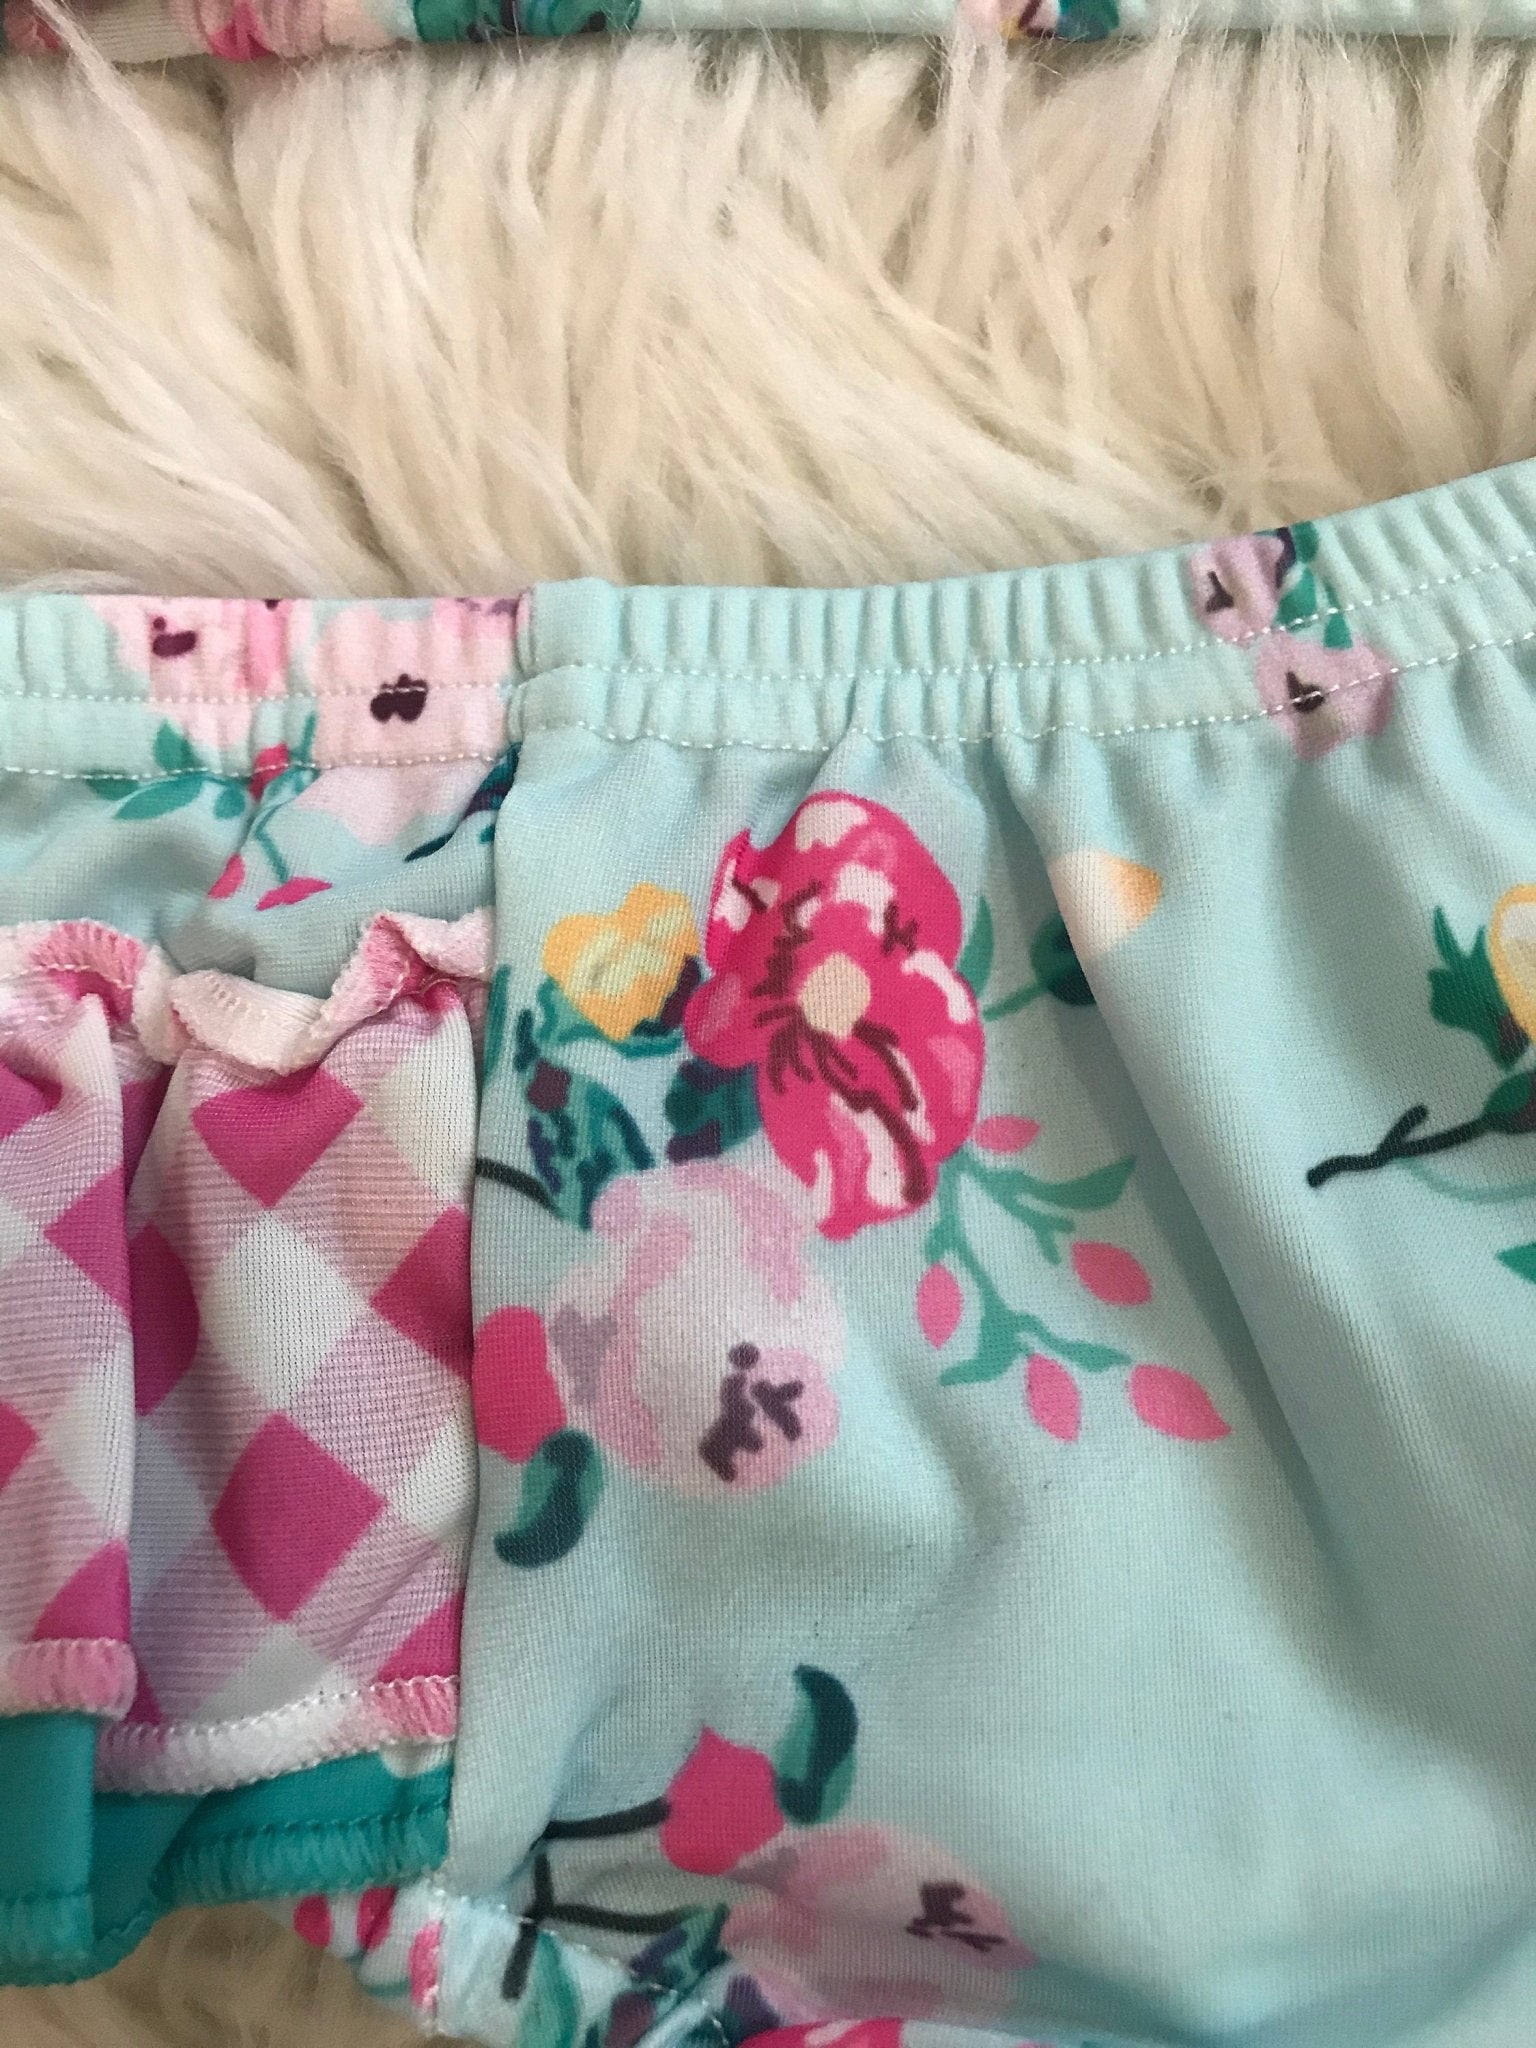 Floral Ruffle Butt Bikini, Polka Dot Flower Ruffle Swim Suit - Razels